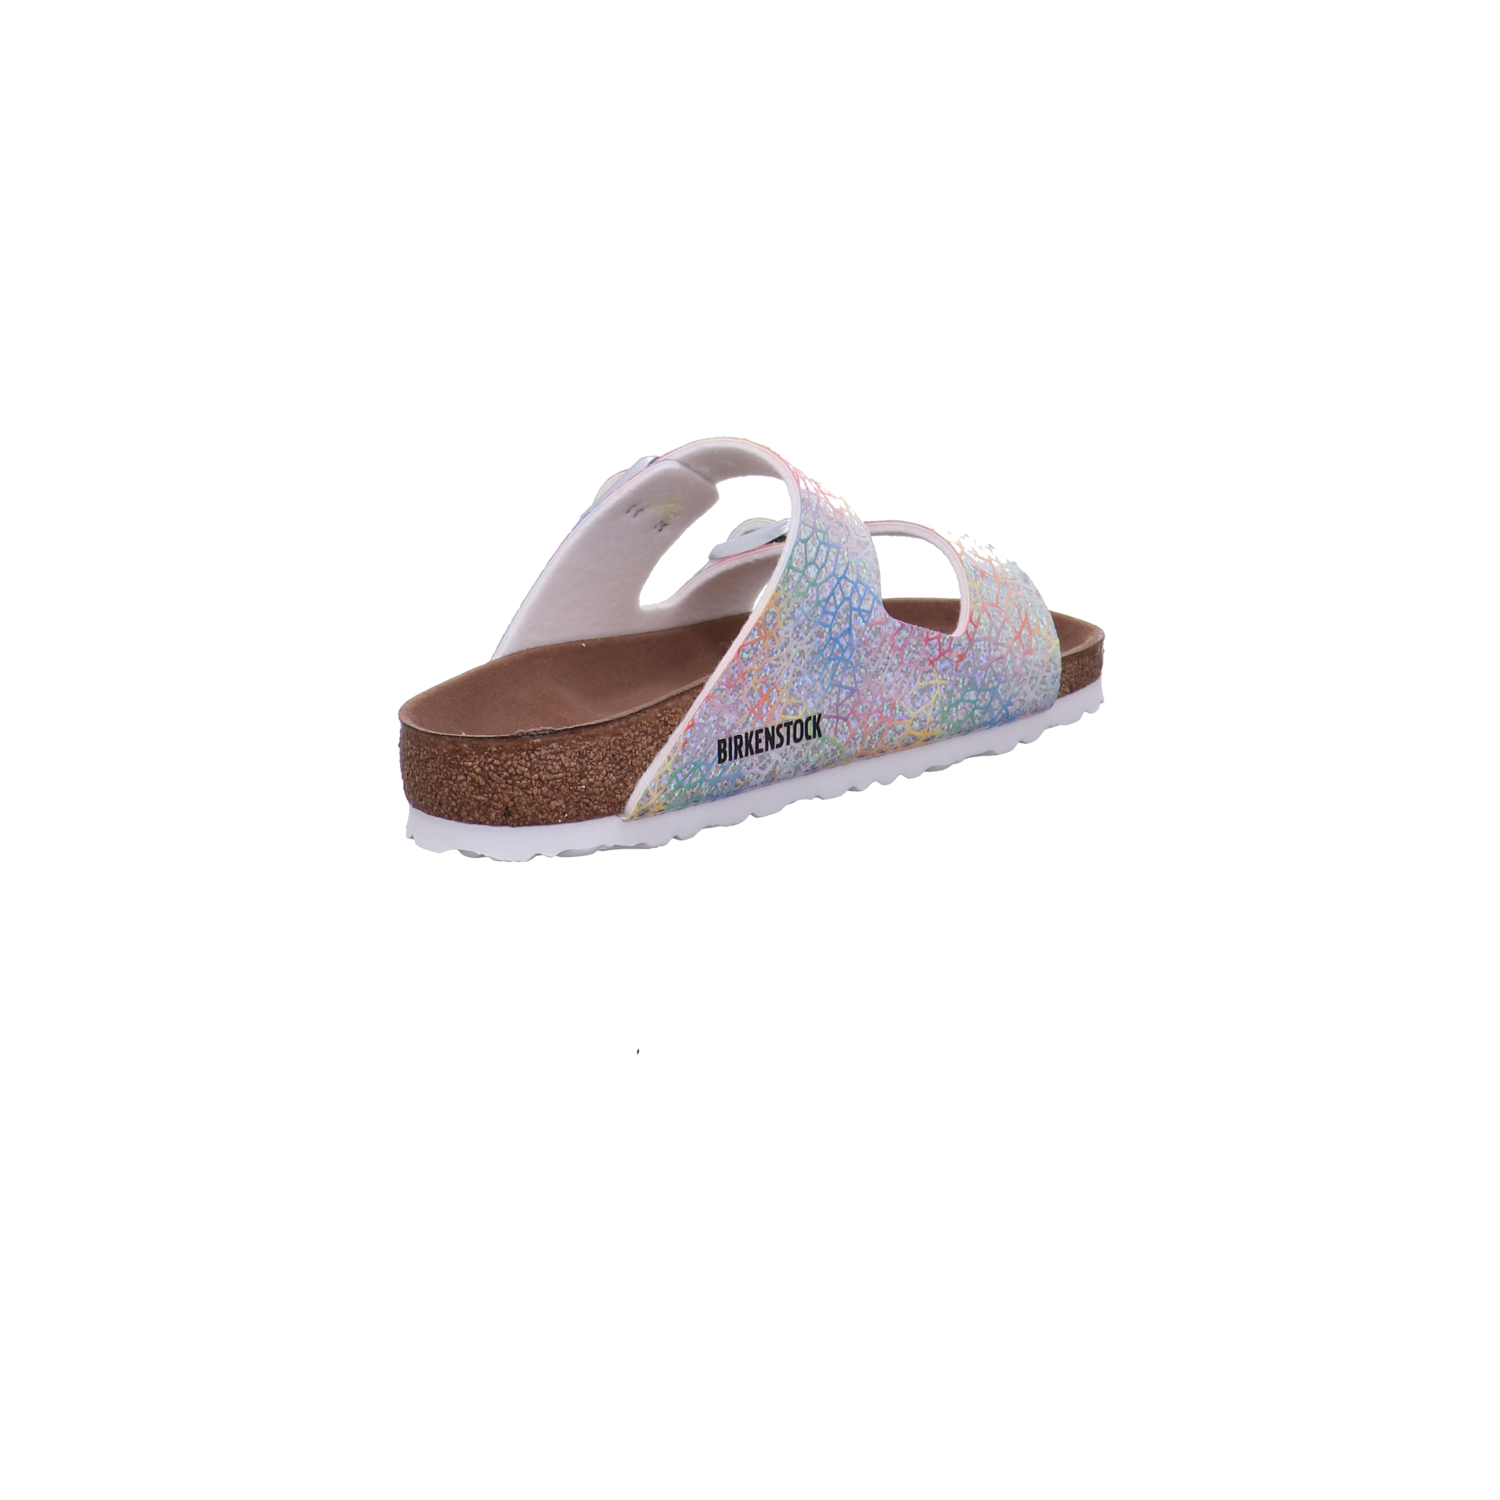 Birkenstock Offene Schuhe silber Bild5